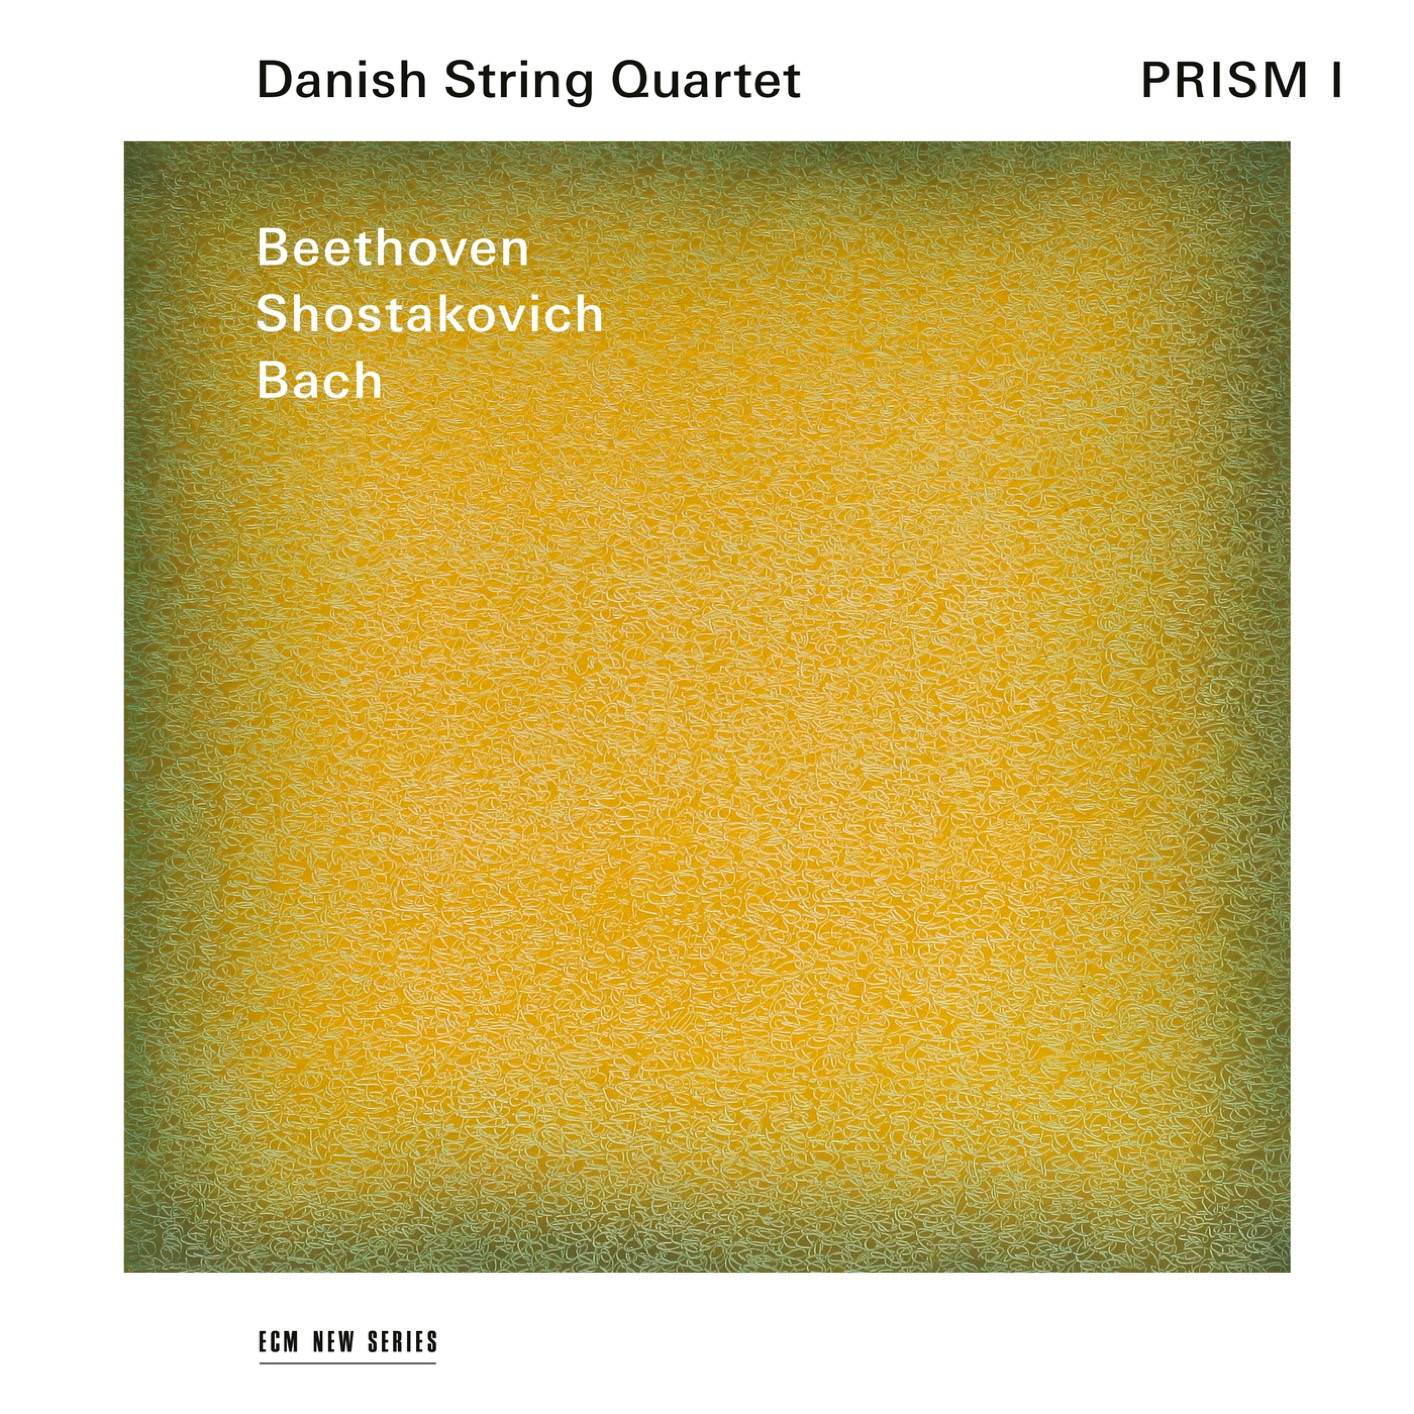 Danish String Quartet - Prism I (2018) [FLAC 24bit/96kHz]